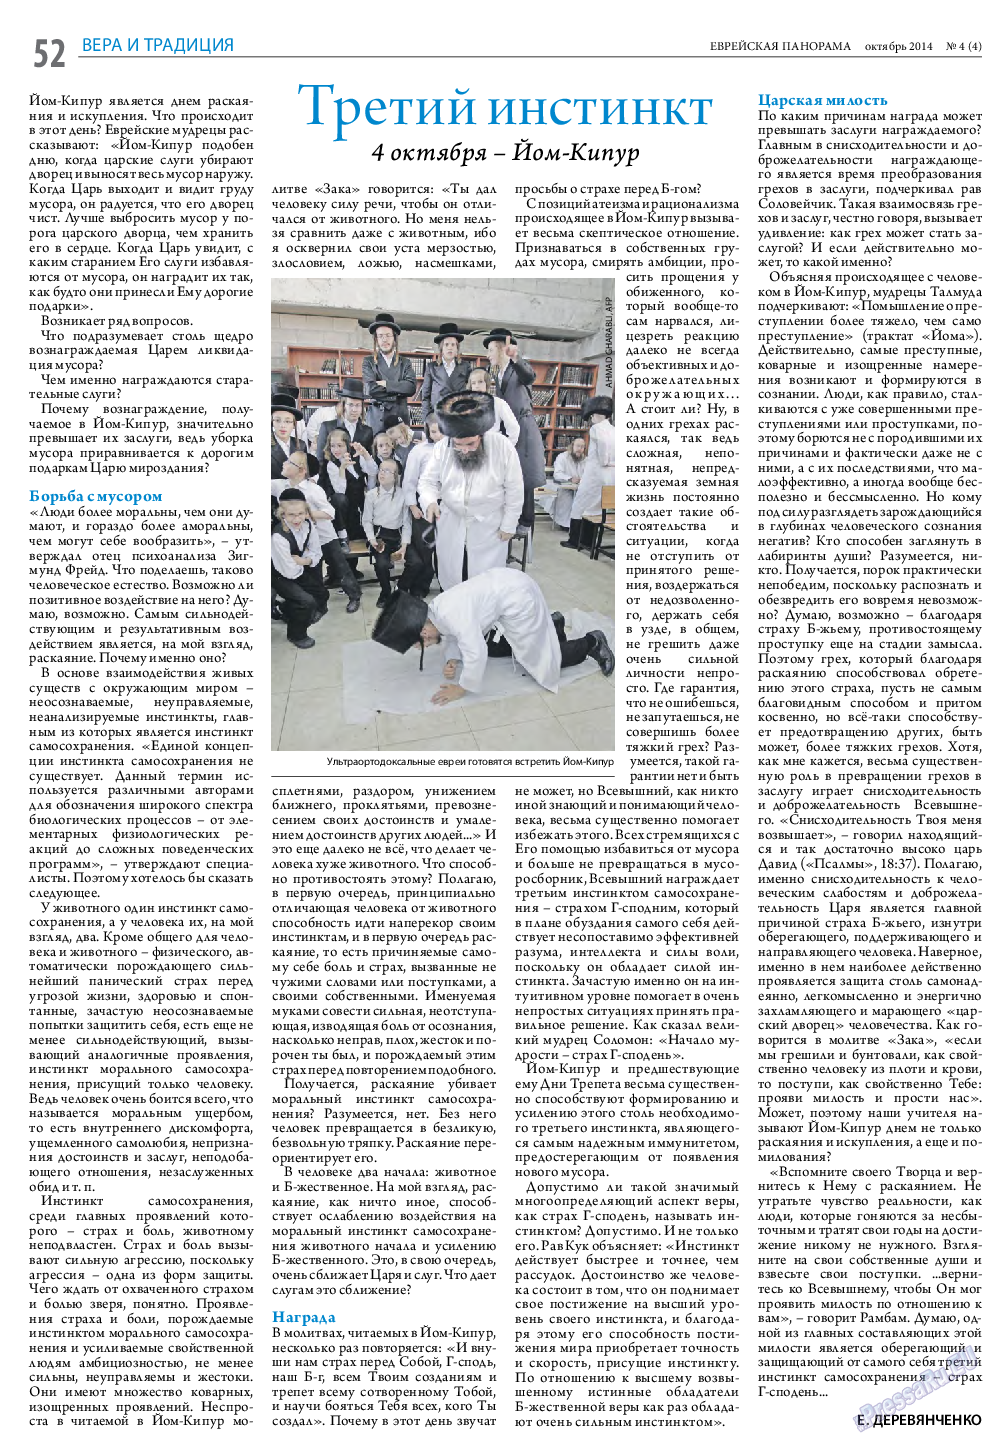 Еврейская панорама, газета. 2014 №4 стр.52